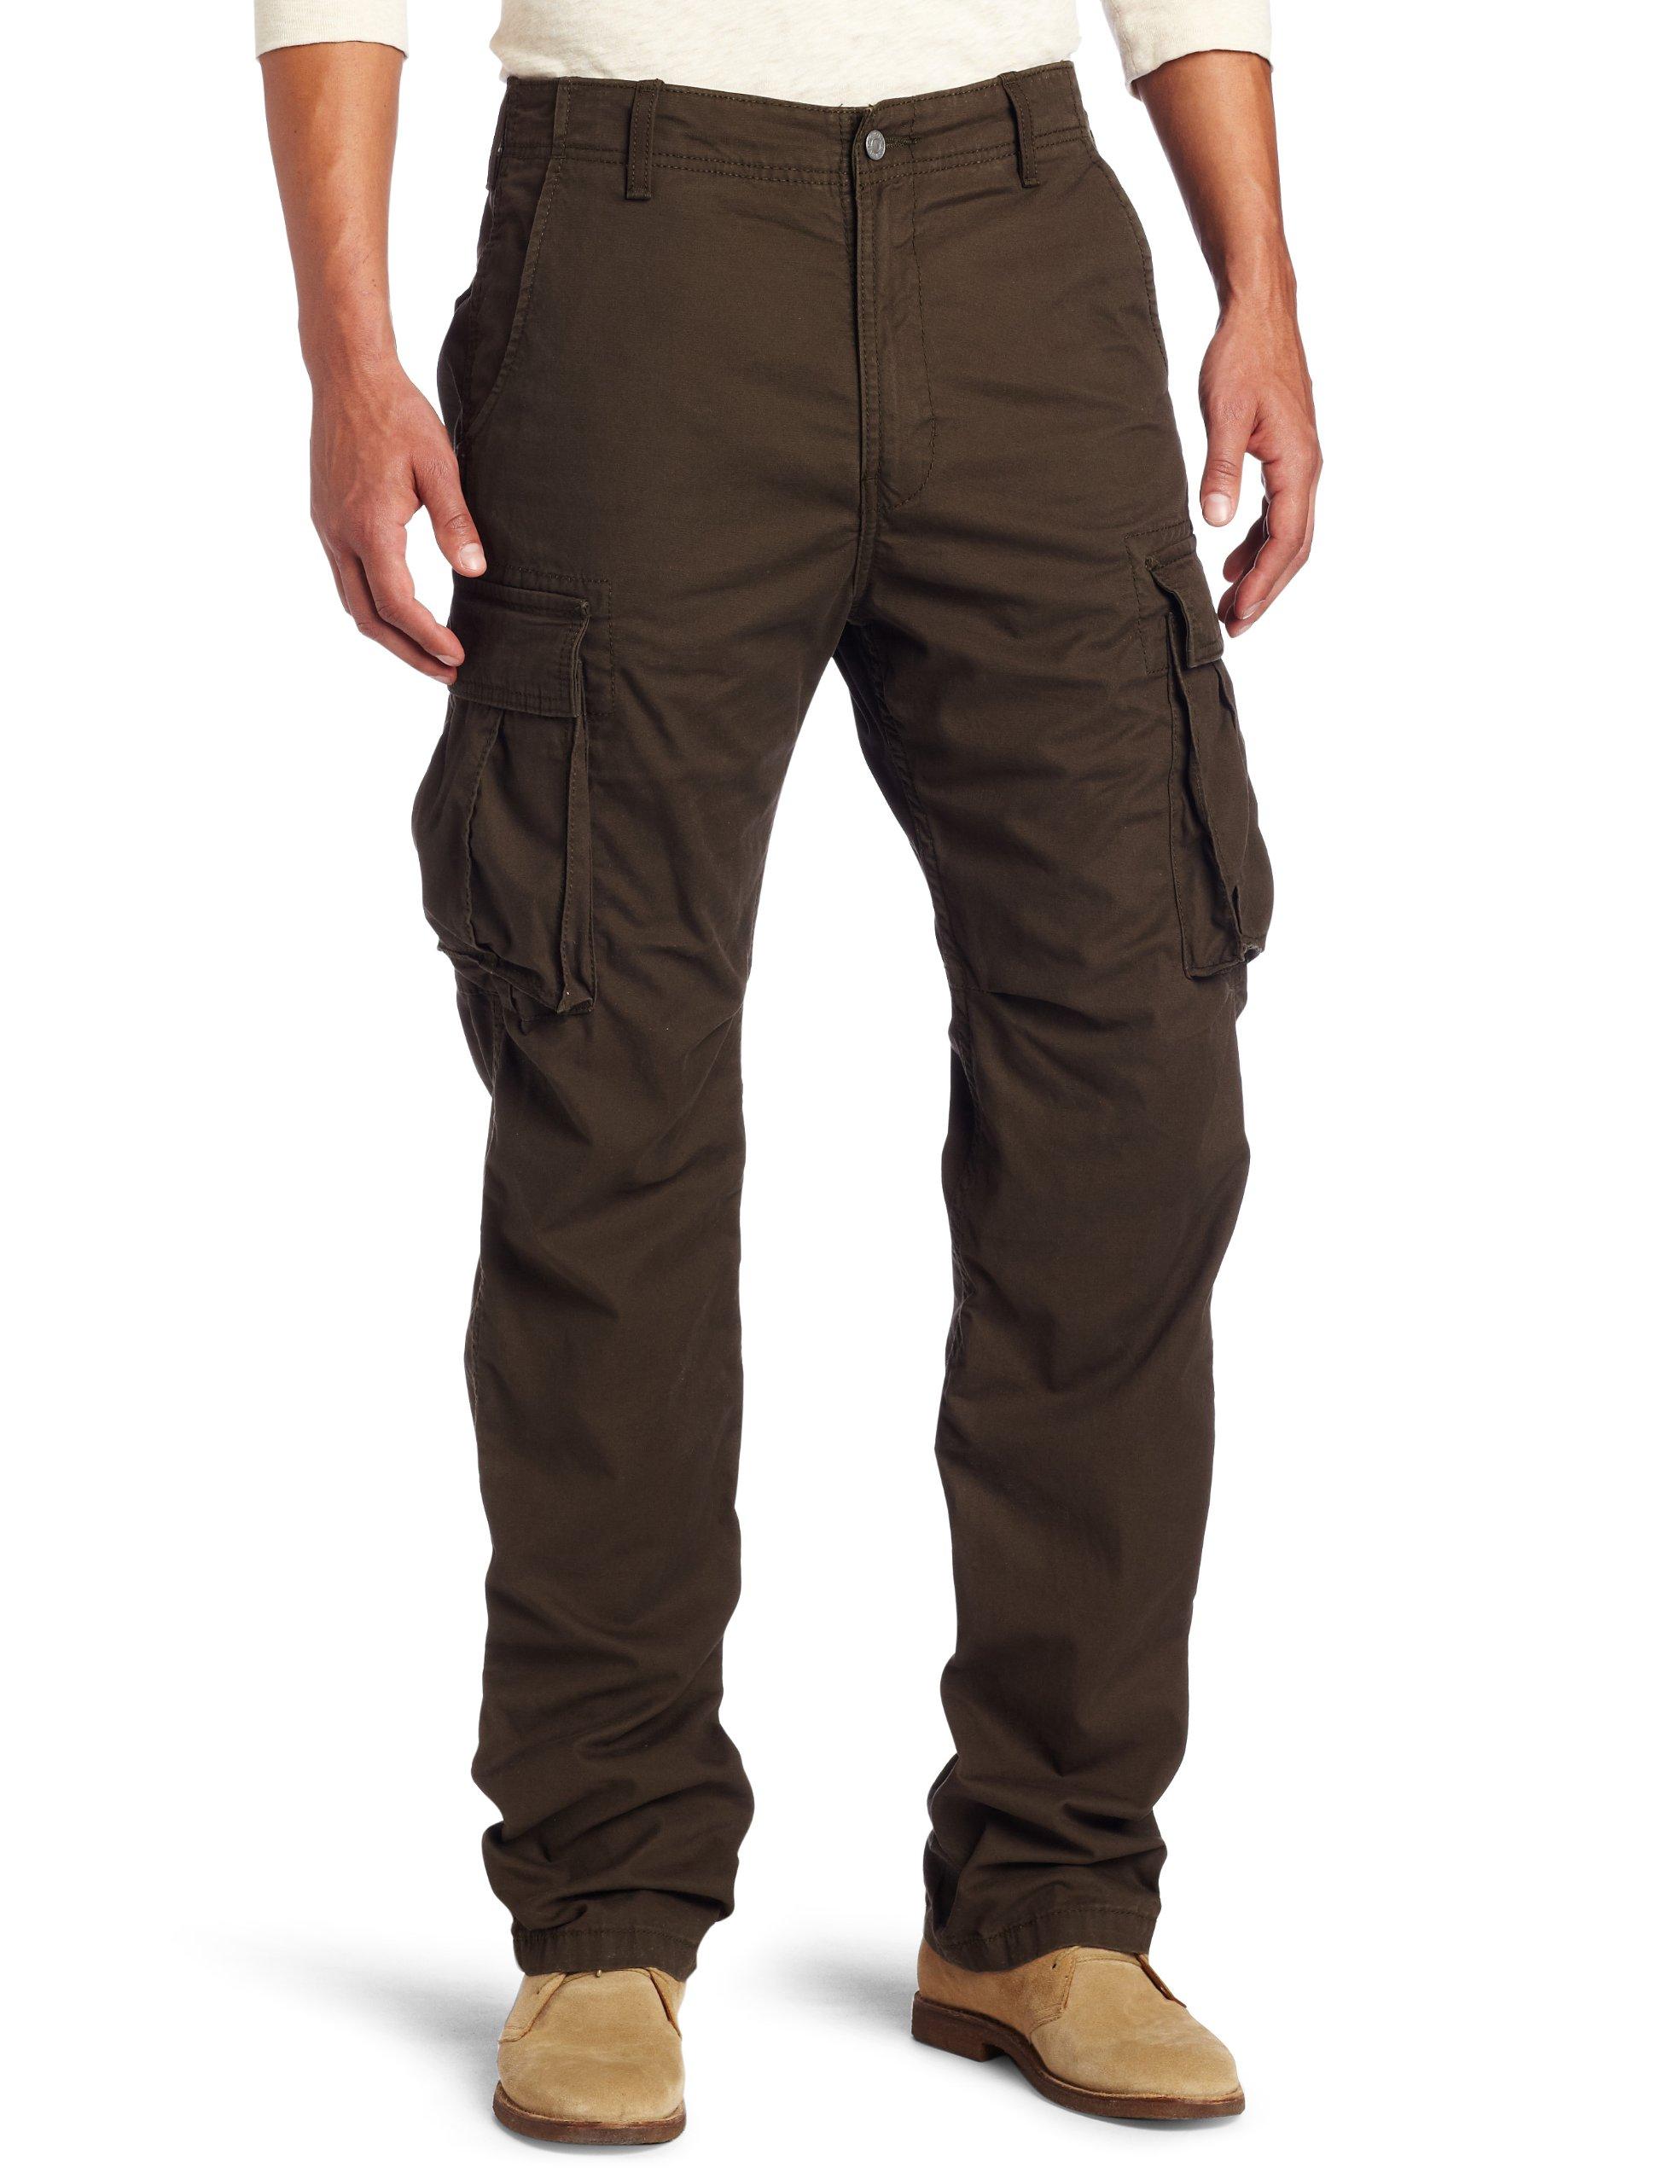 Levis 514 Pants Mens 32 Beige Khaki Straight Leg Cotton Pockets Logo 32x30  | eBay